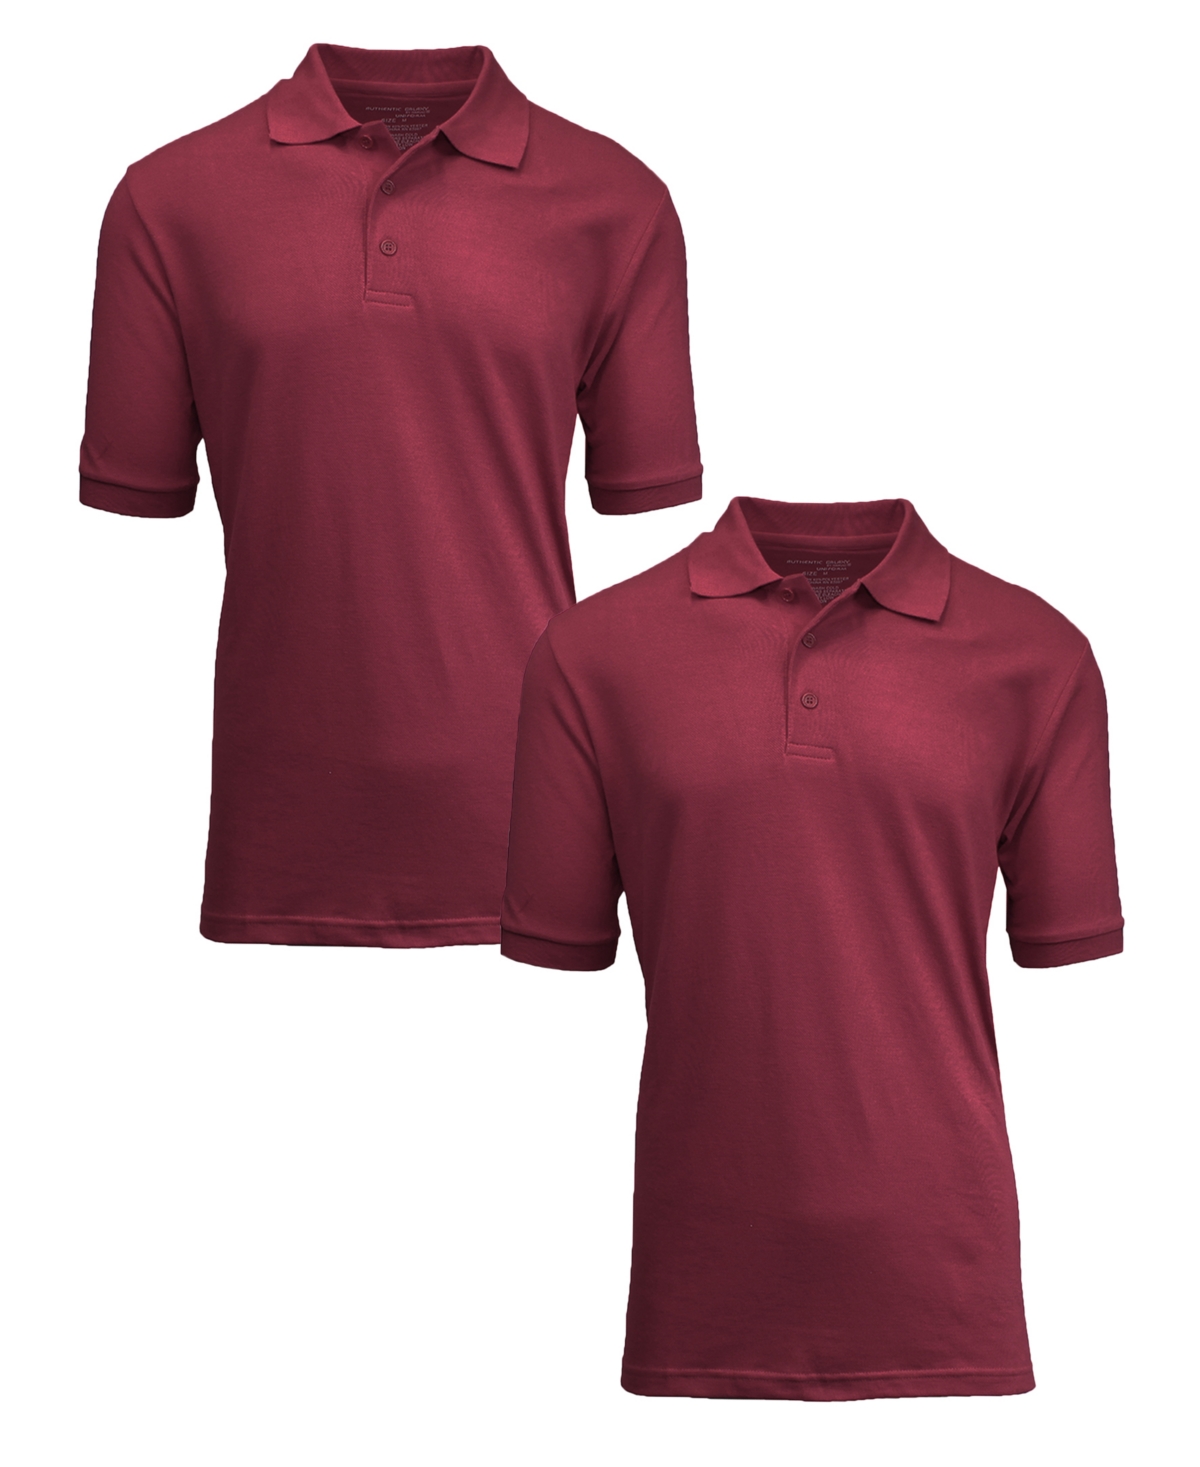 Men's Short Sleeve Pique Polo Shirt, Pack of 2 - Black